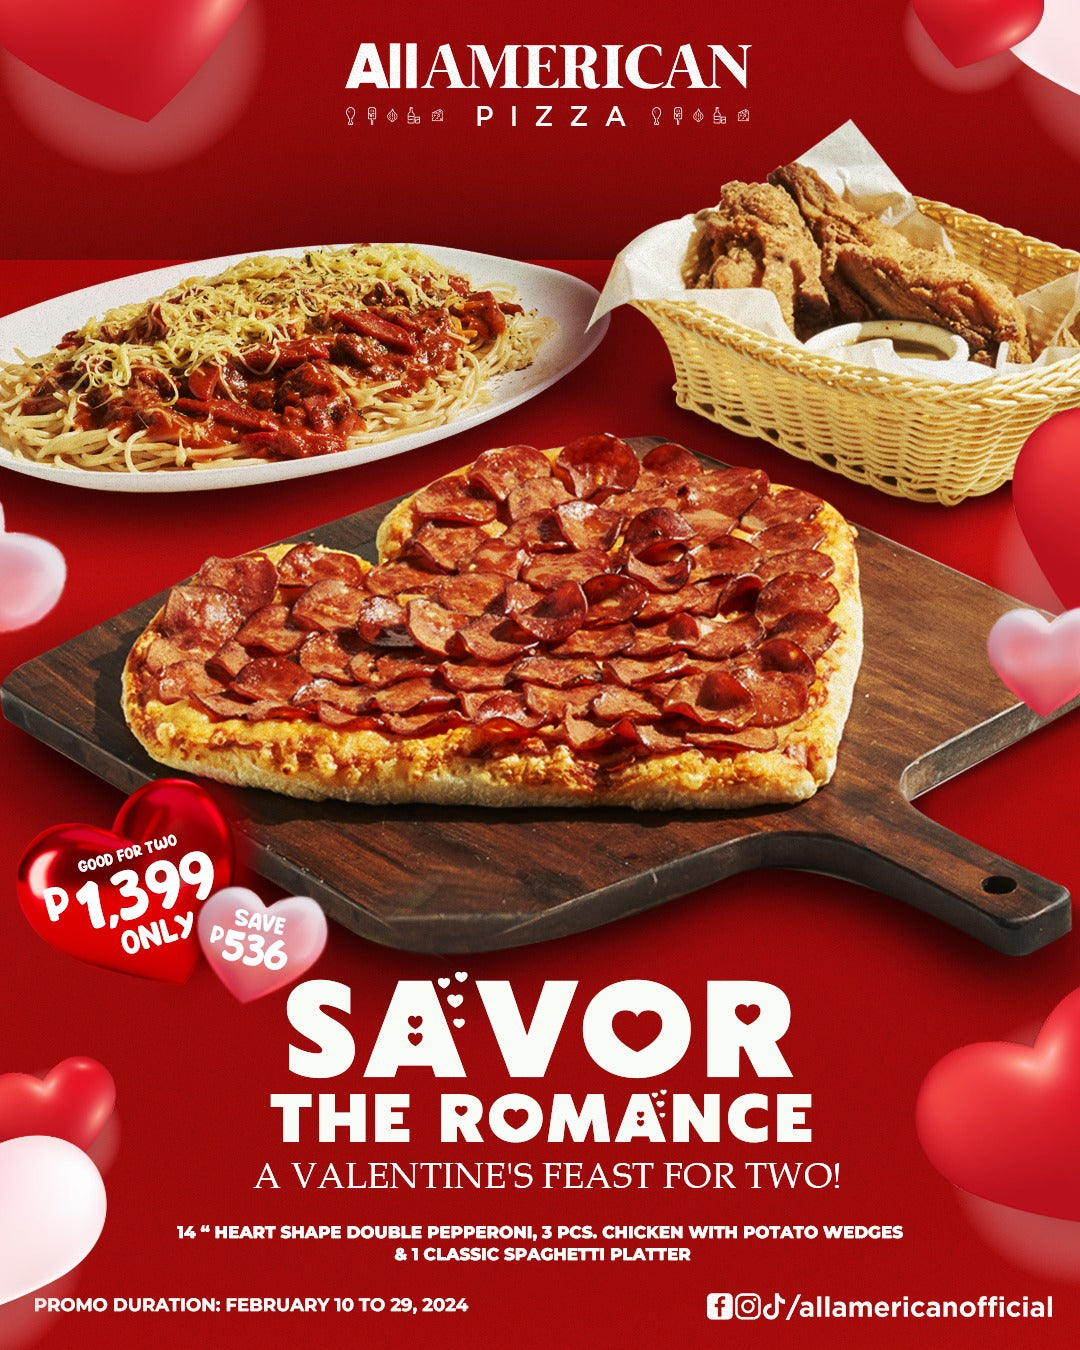 Savor the Romance!  ❤